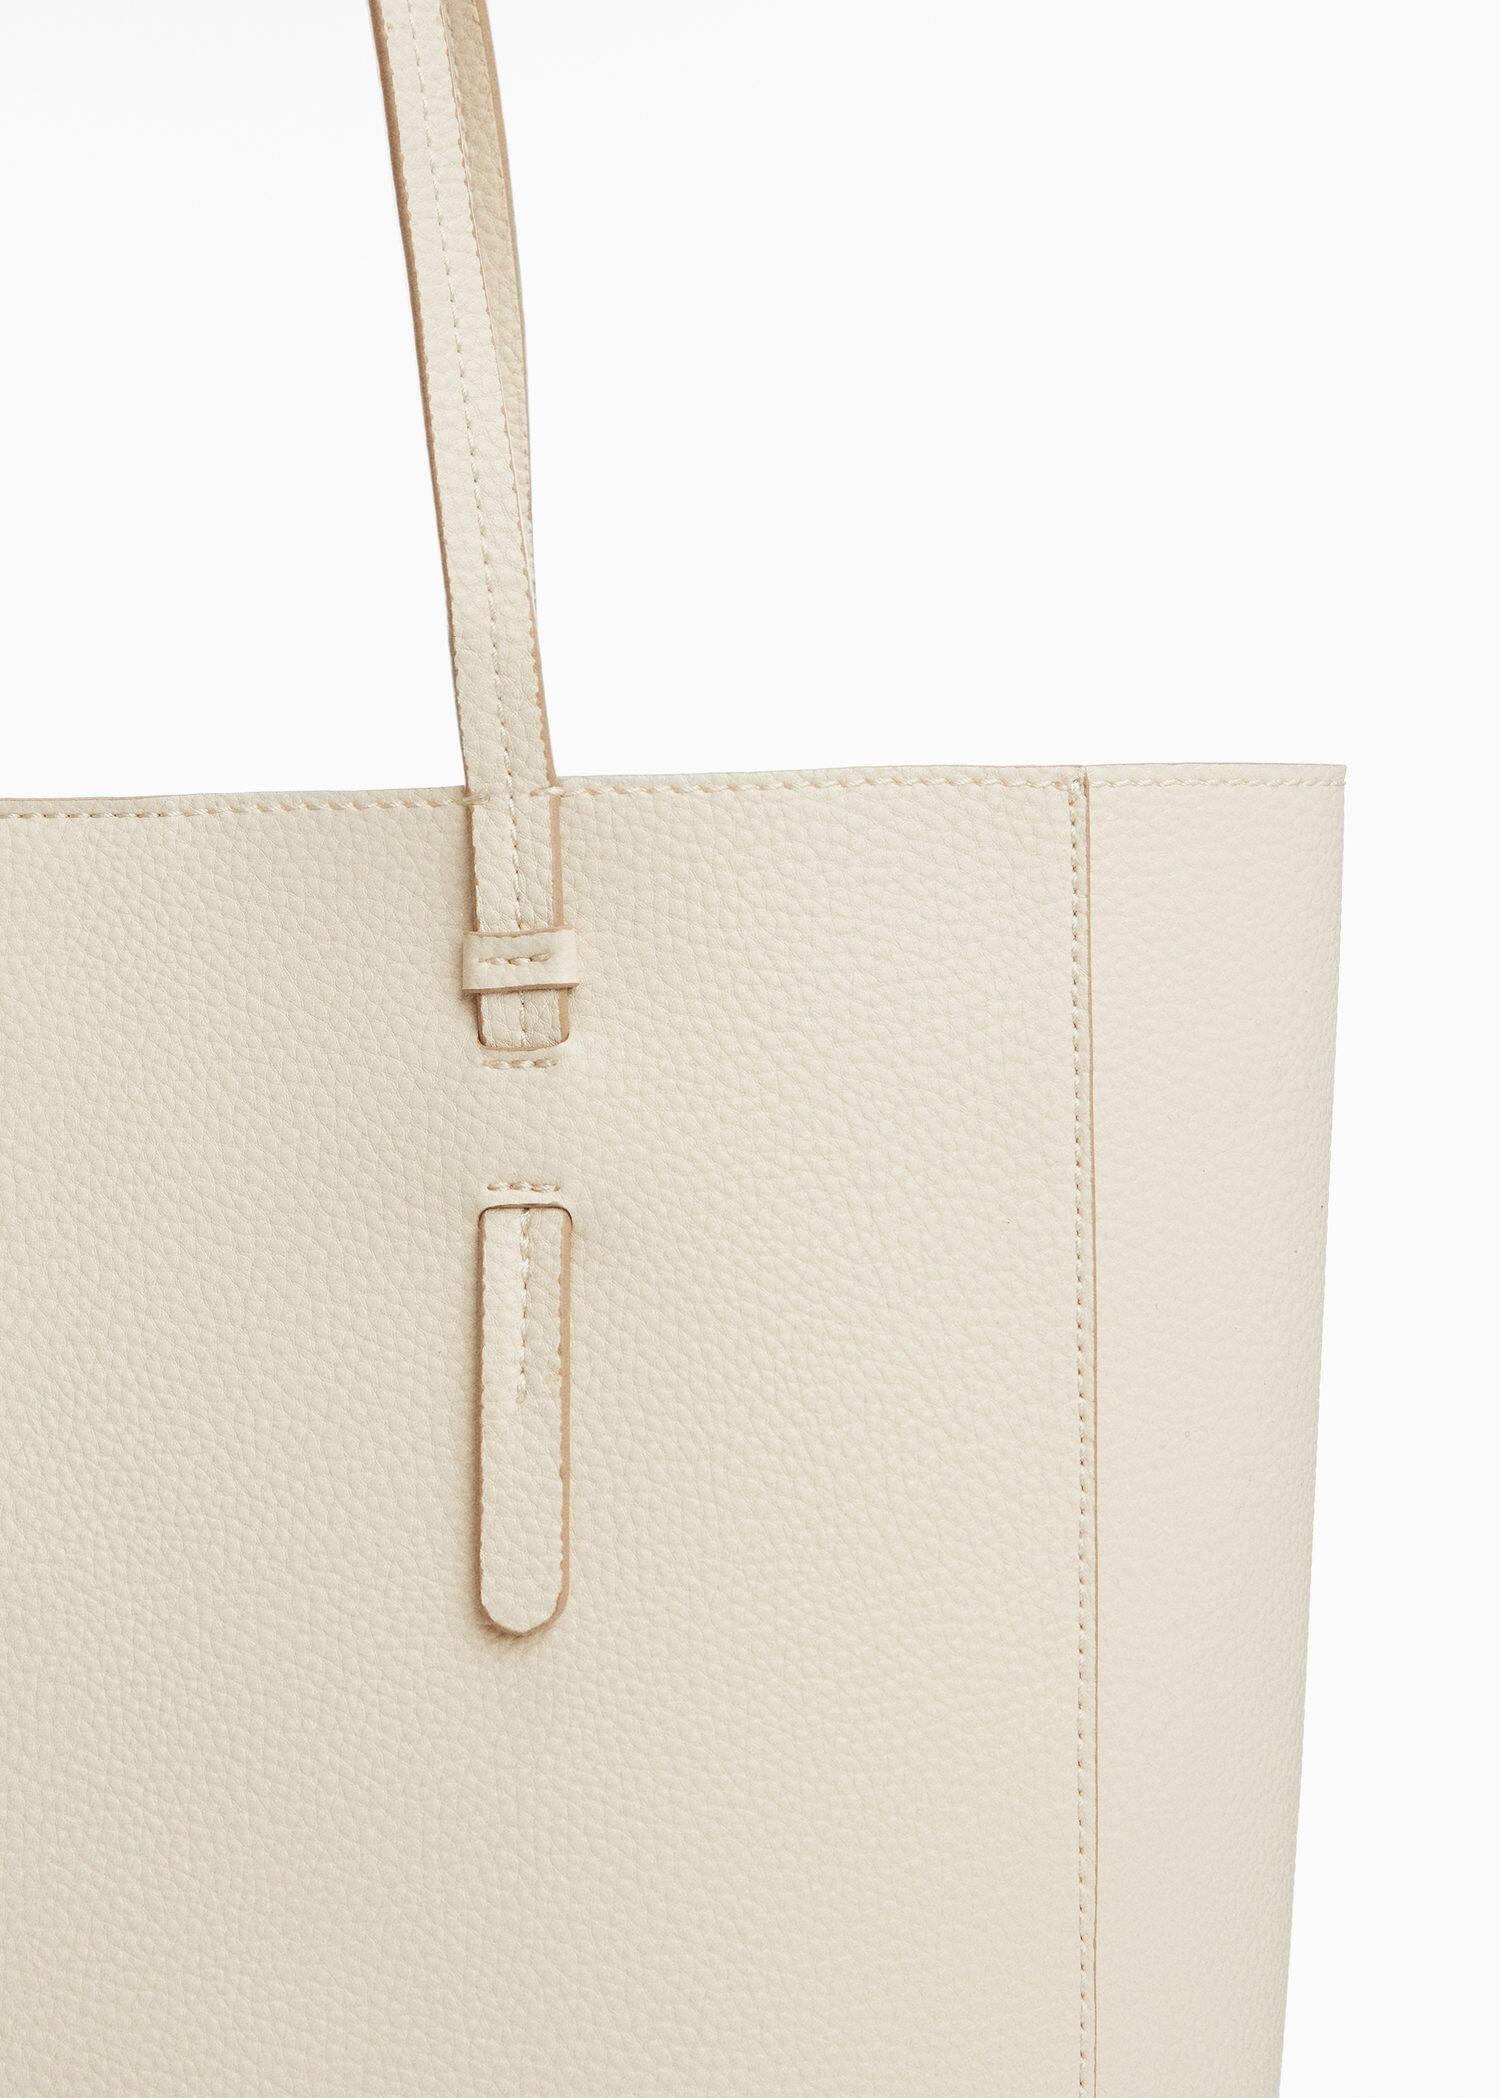 Mango - White Leather-Effect Shopper Bag